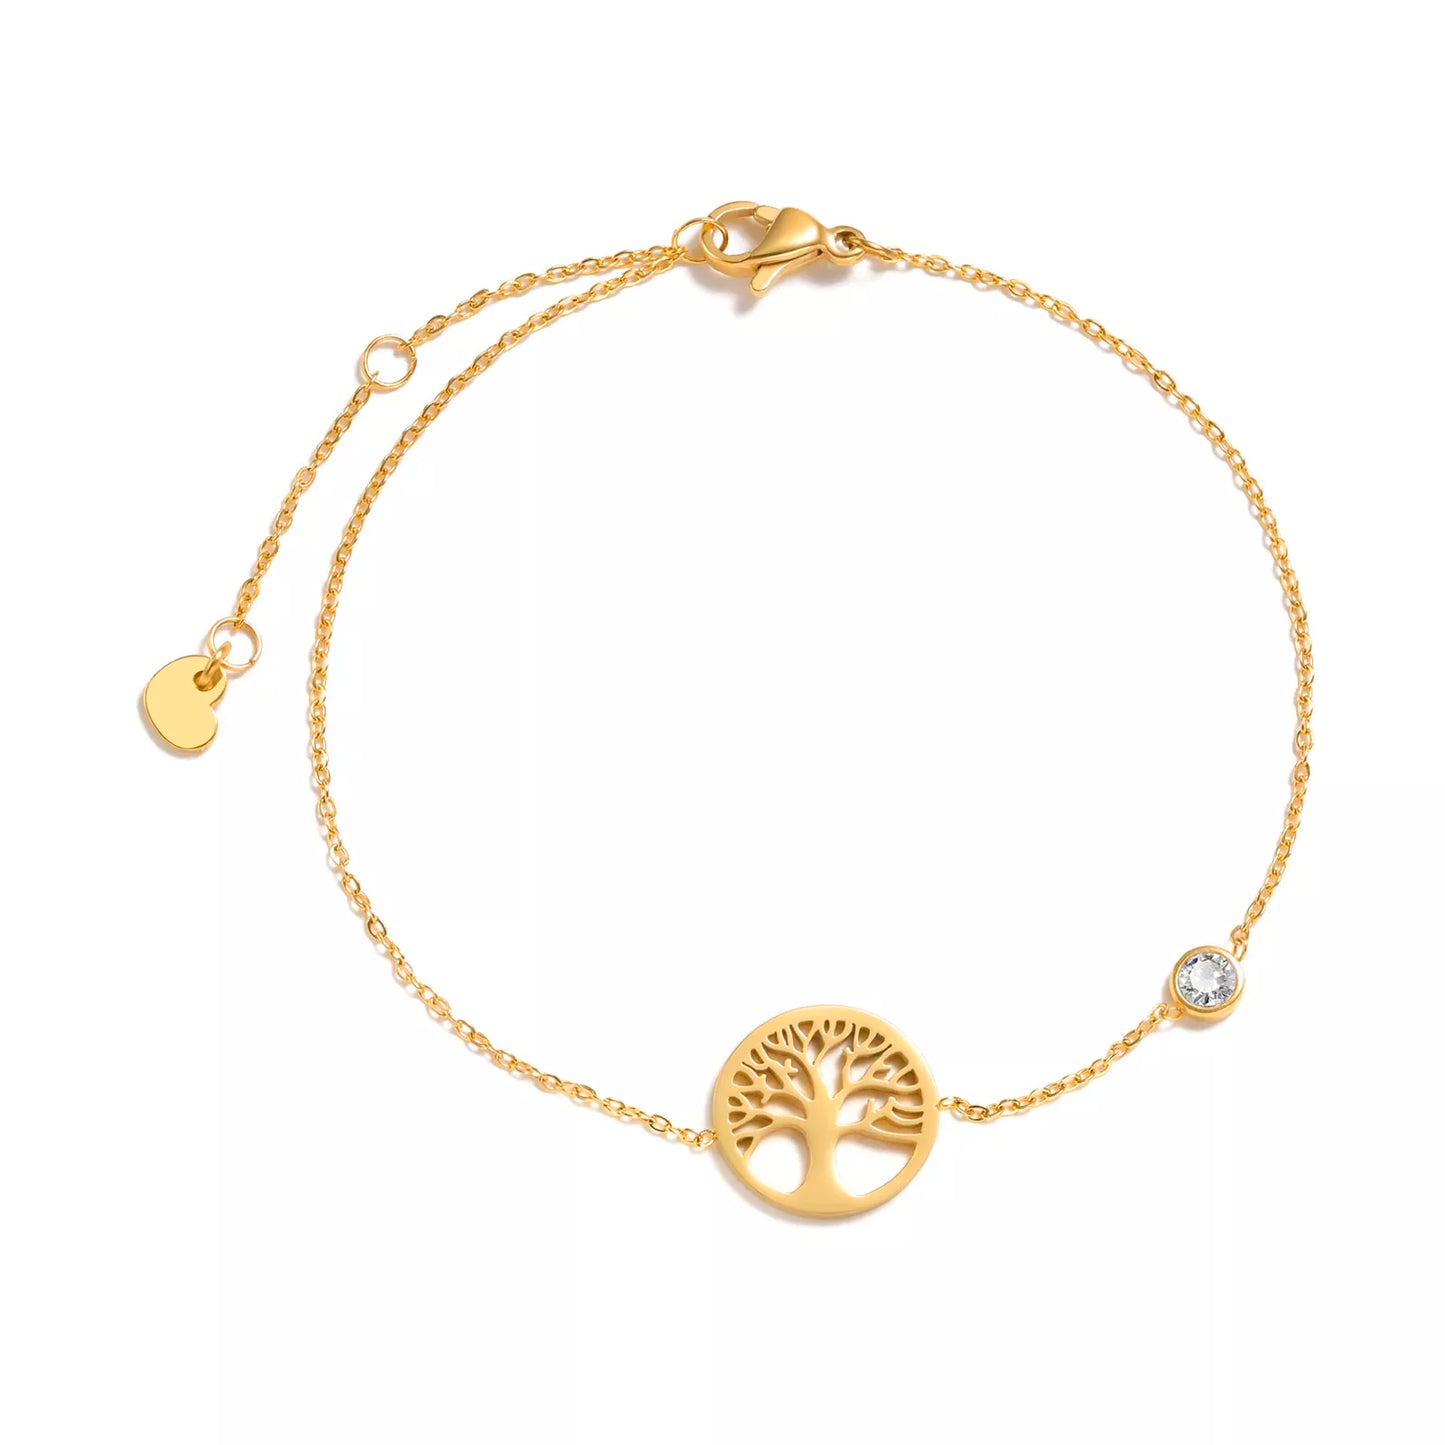 Tree of Life Charm Bracelet Adjustable18 K Gold Chain Bracelet Stainless Steel with CZ Jewelry